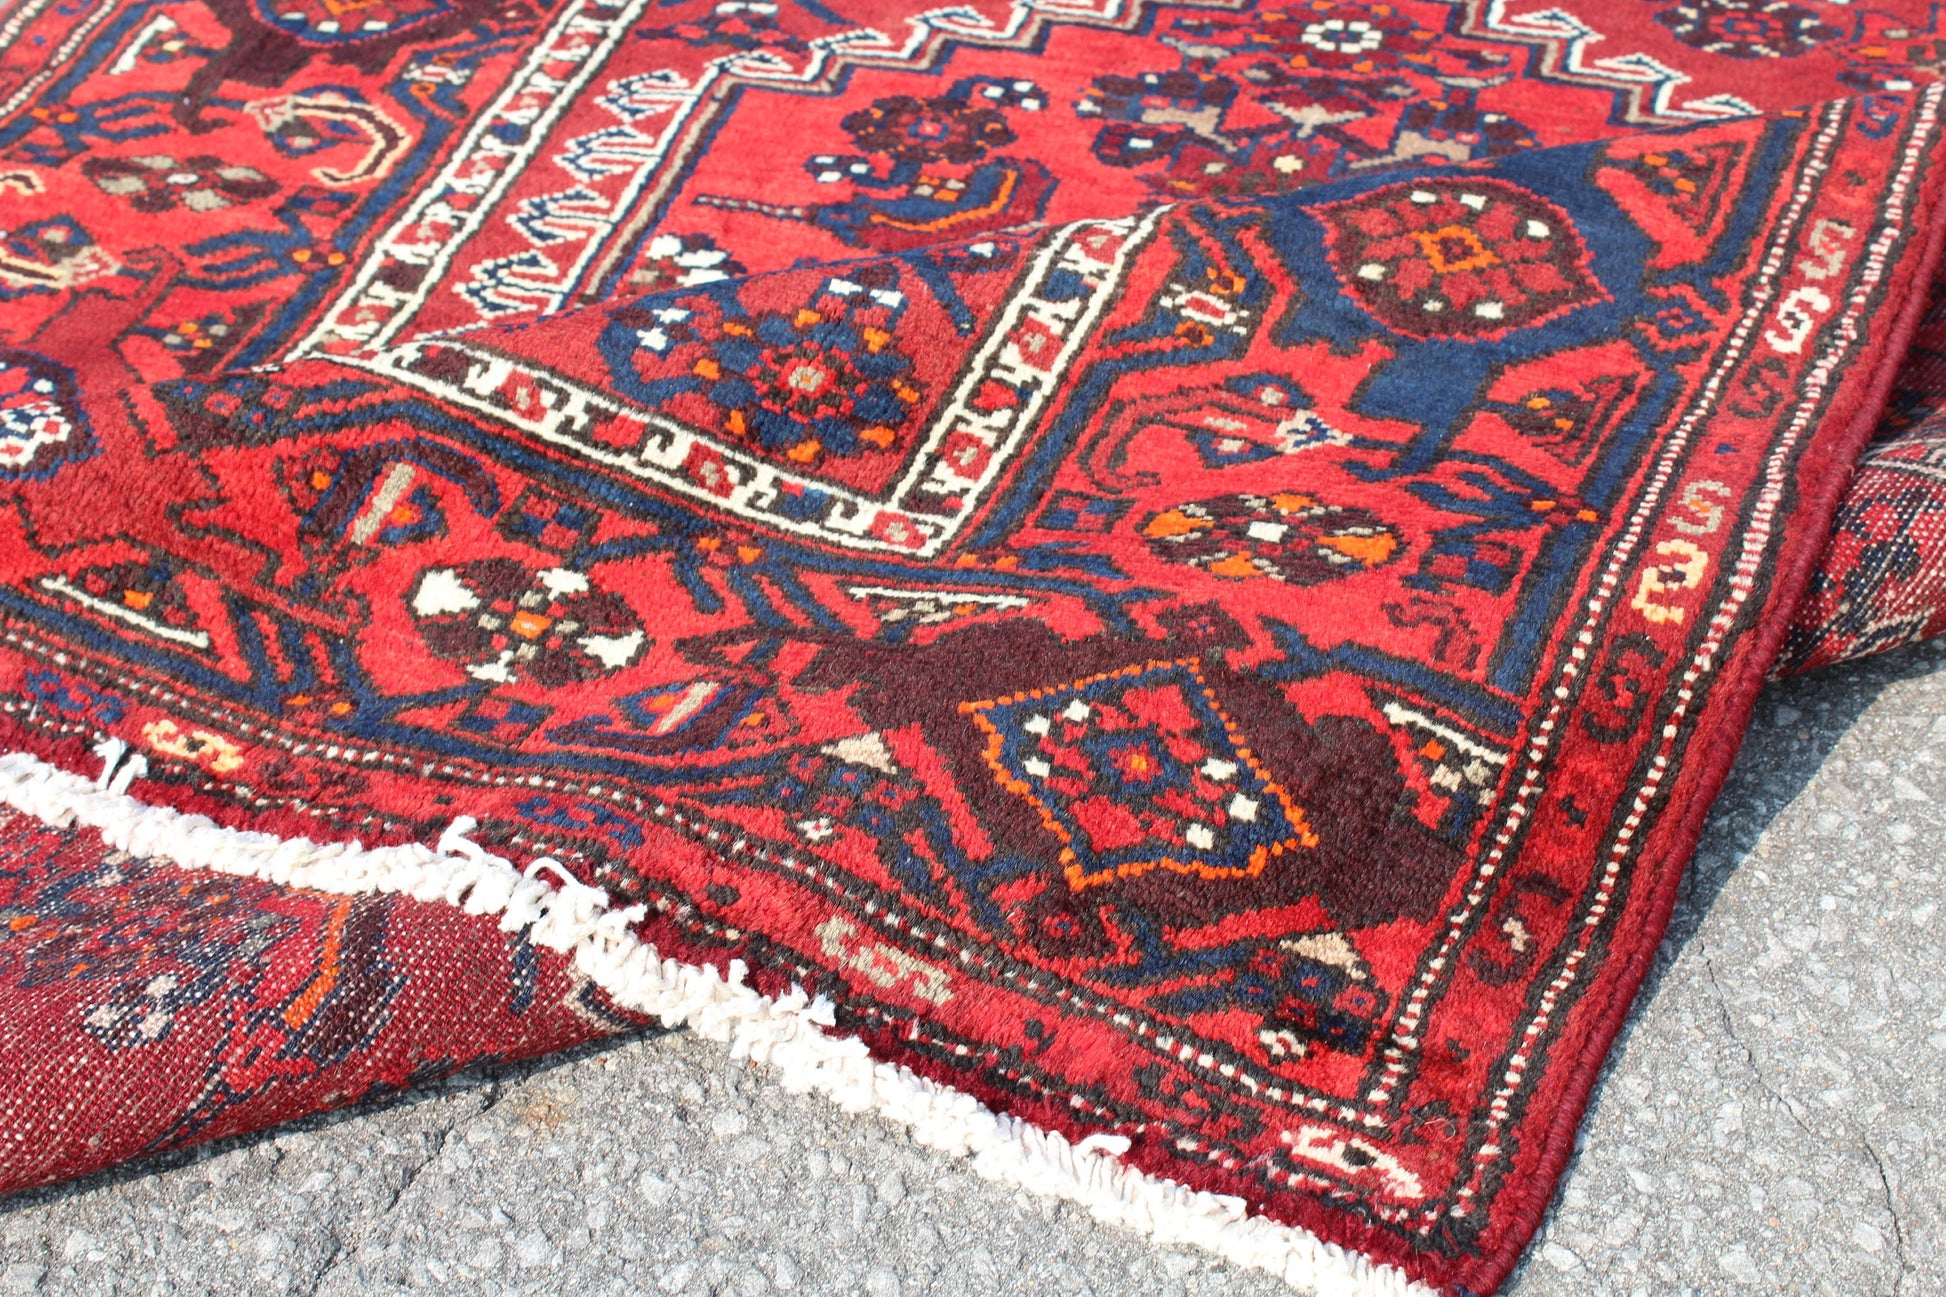 Bright Red 4x7 Vintage Tribal Persian Style Handmade Wool Rug